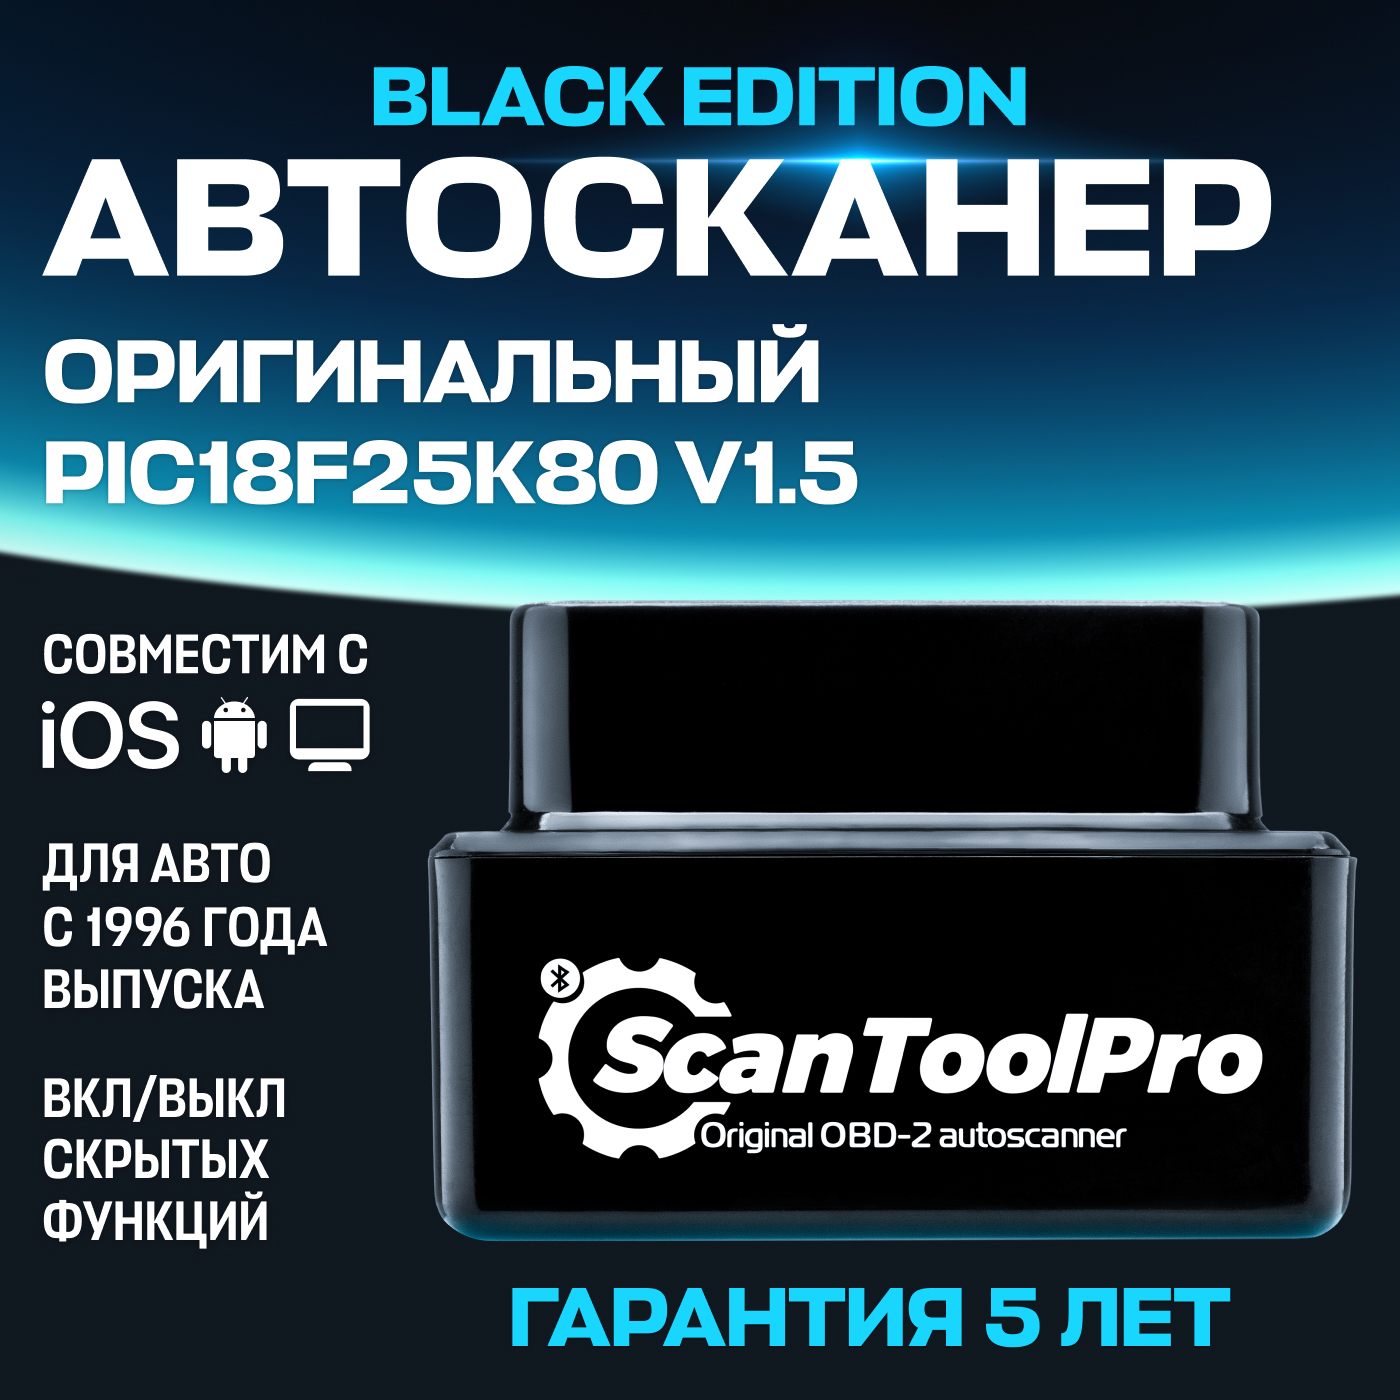 Автосканер Scan Tool Pro Black Edition Bluetooth OBD2 ELM 327 v1.5+, pic18f25k80